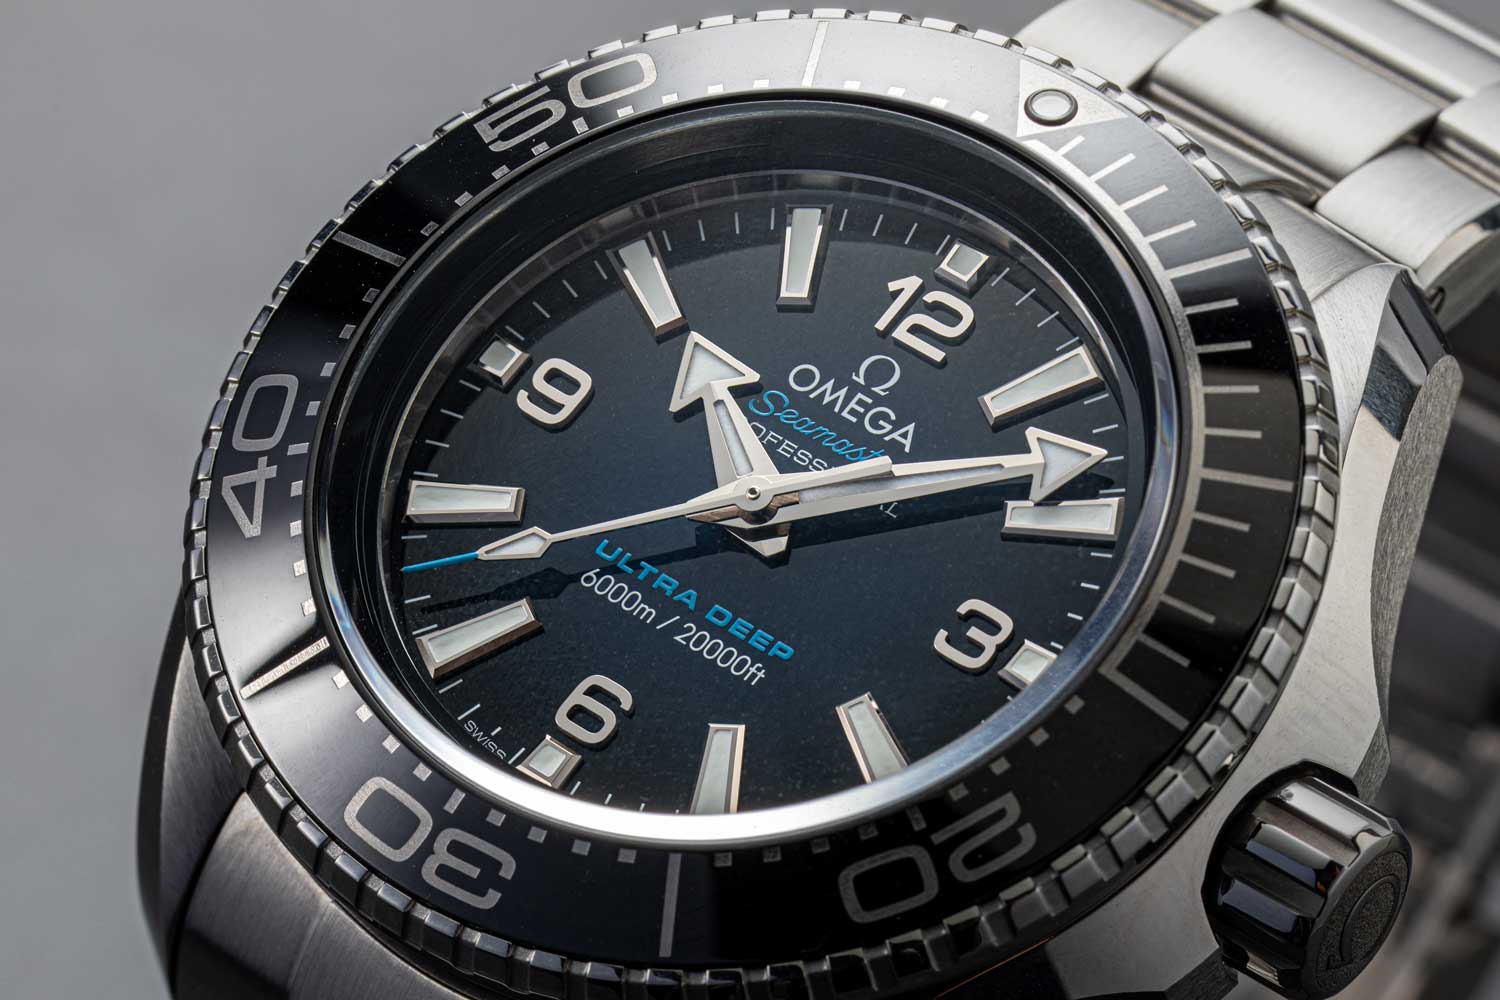 Đồng hồ Omega Titan Ultra Deep chiếc đồng hồ lặn đẳng cấp